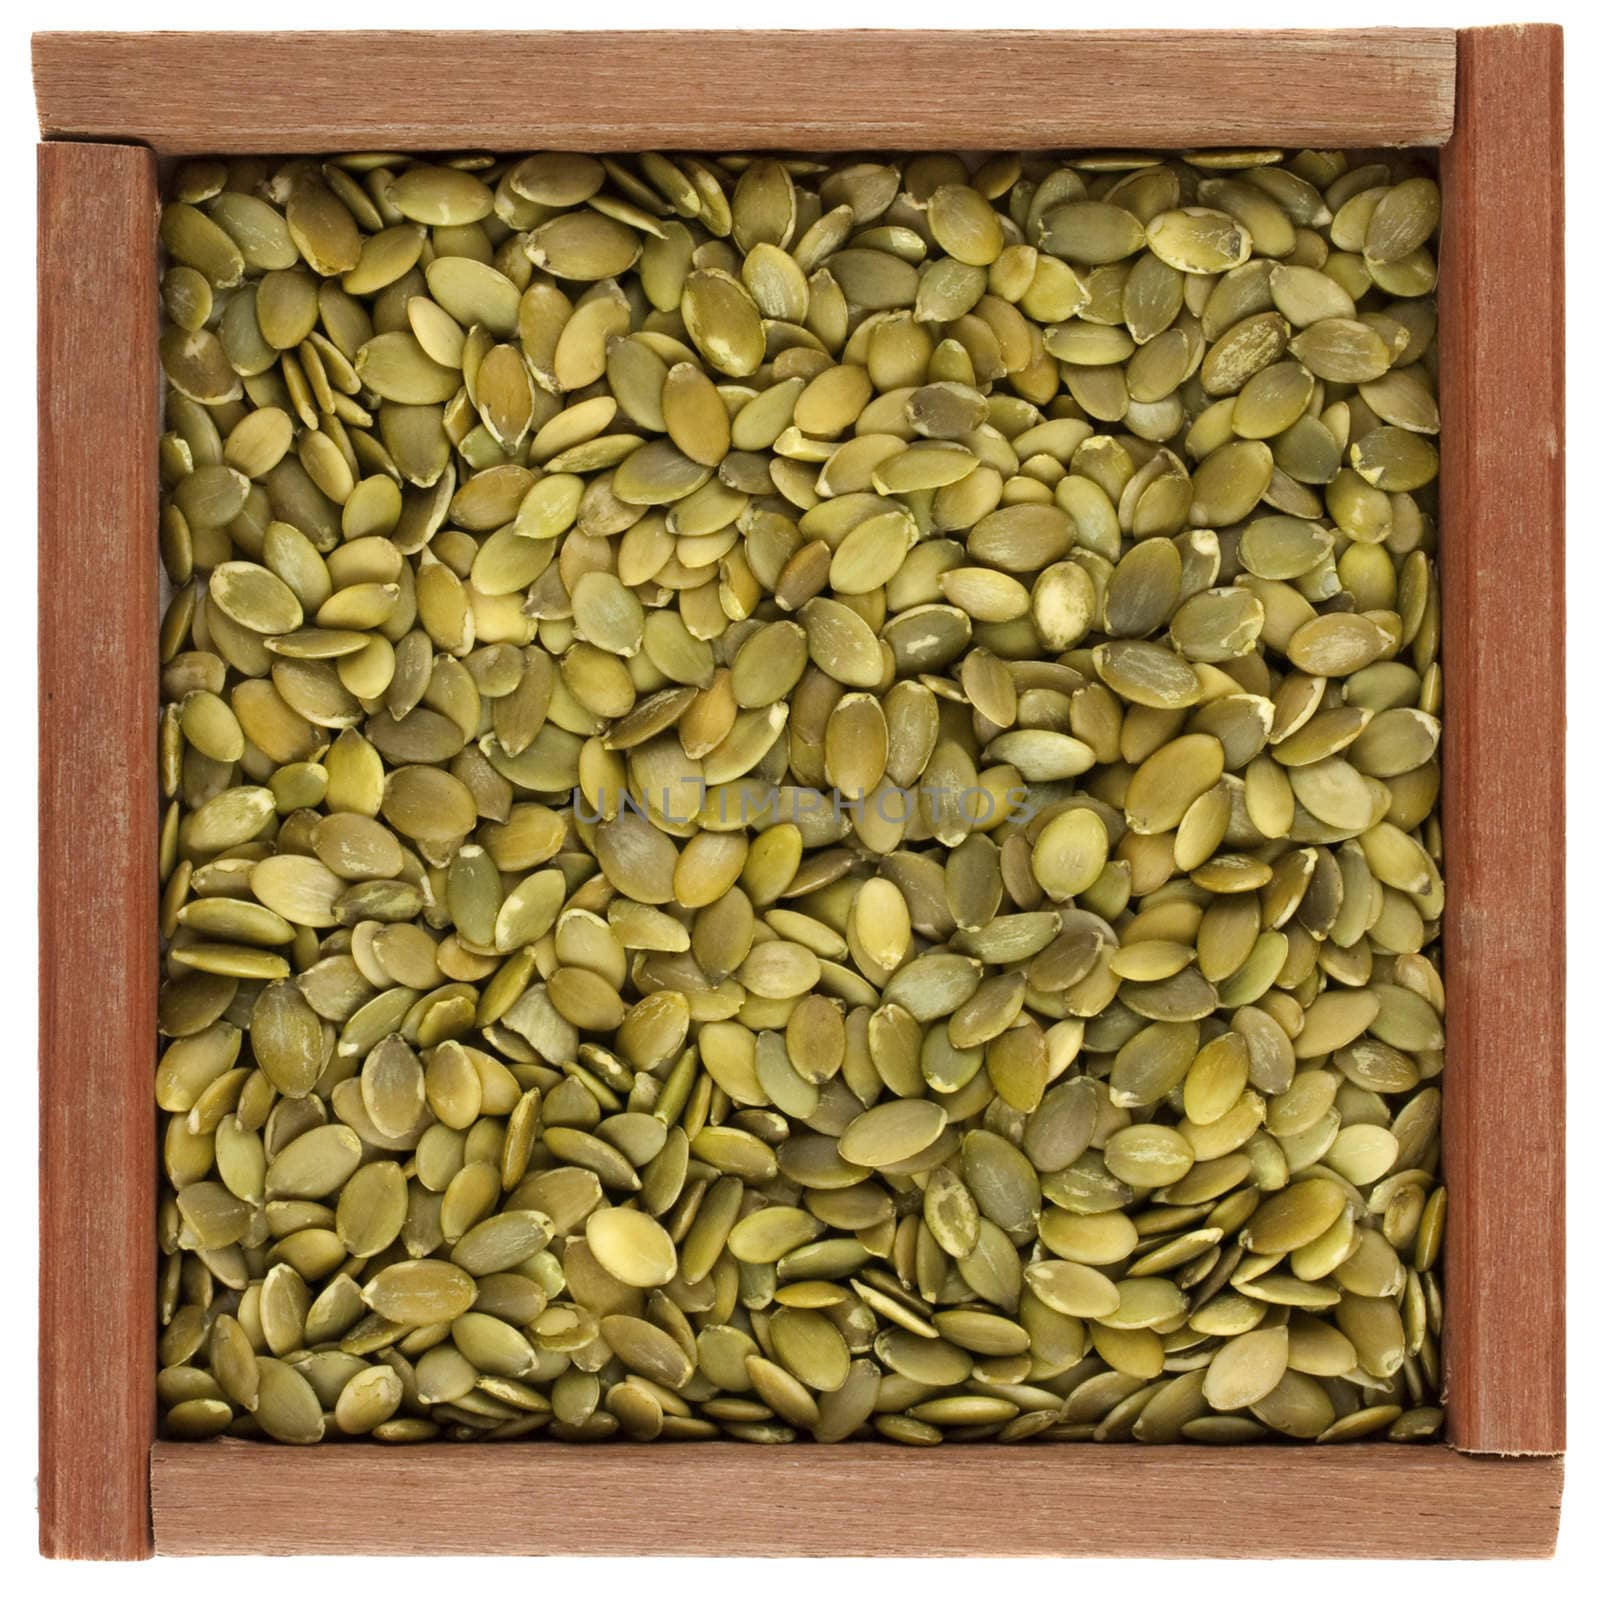 pepitas (pumpkin seeds) in a wooden box by PixelsAway